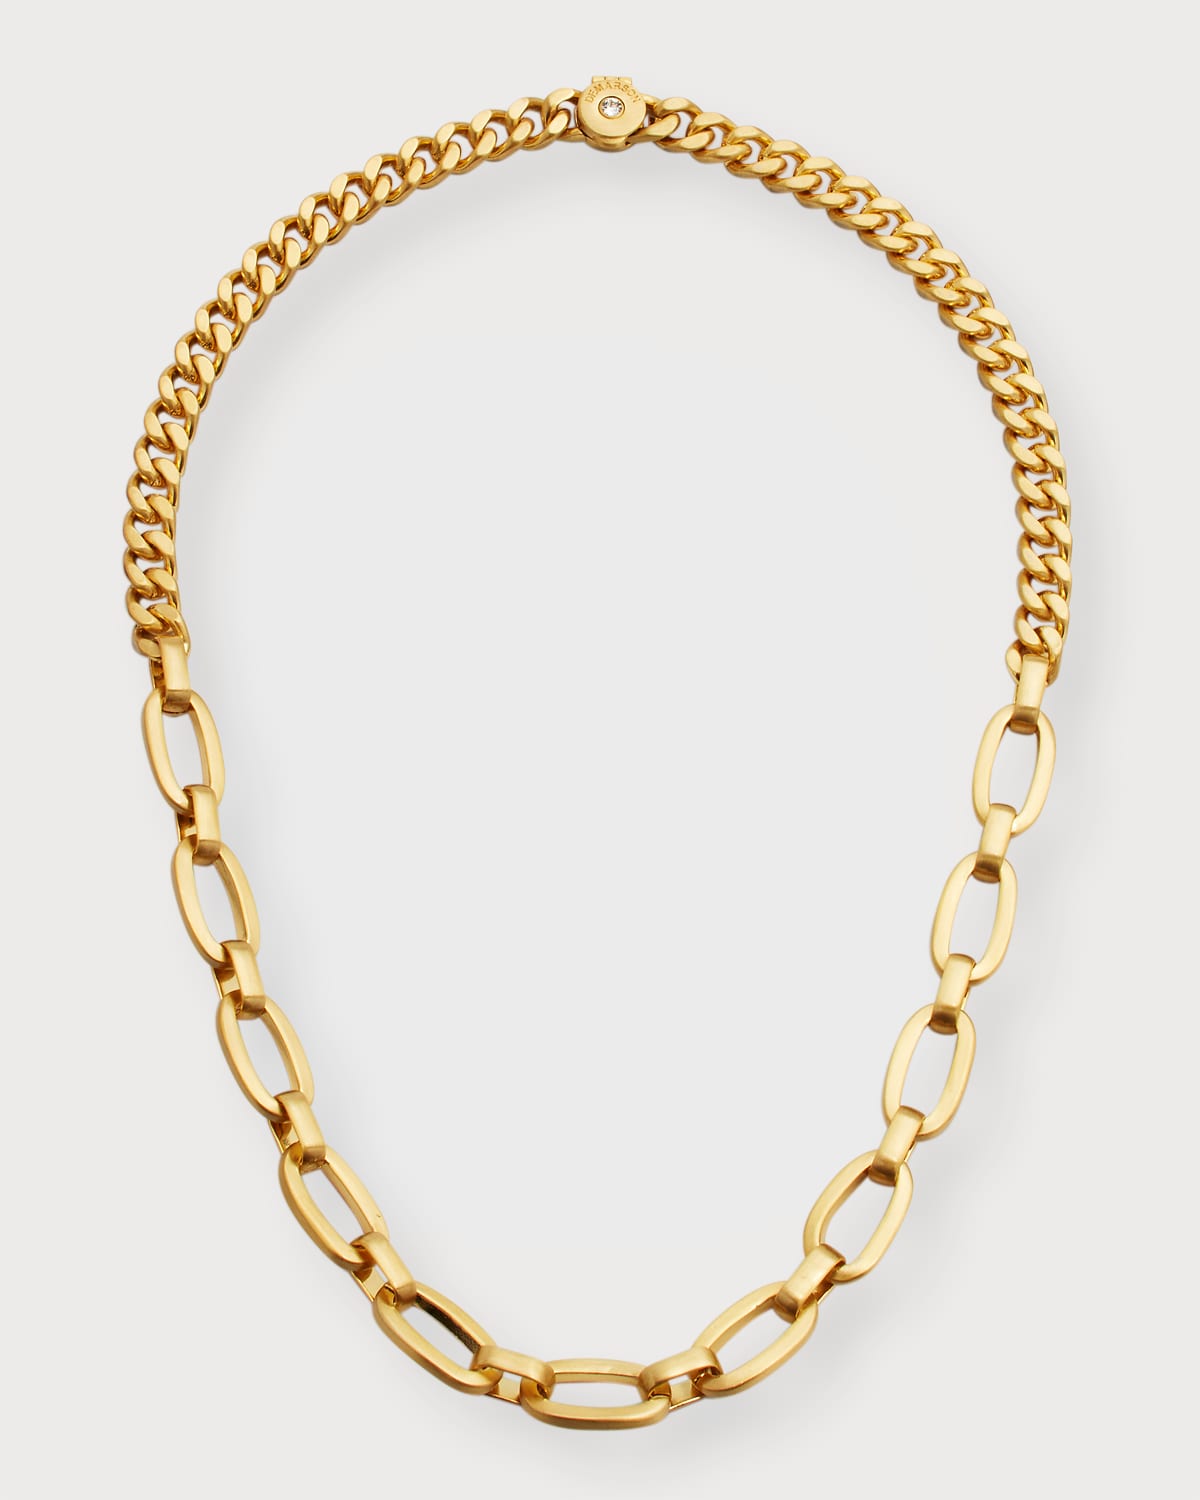 Aviva Chain Necklace, 19"L